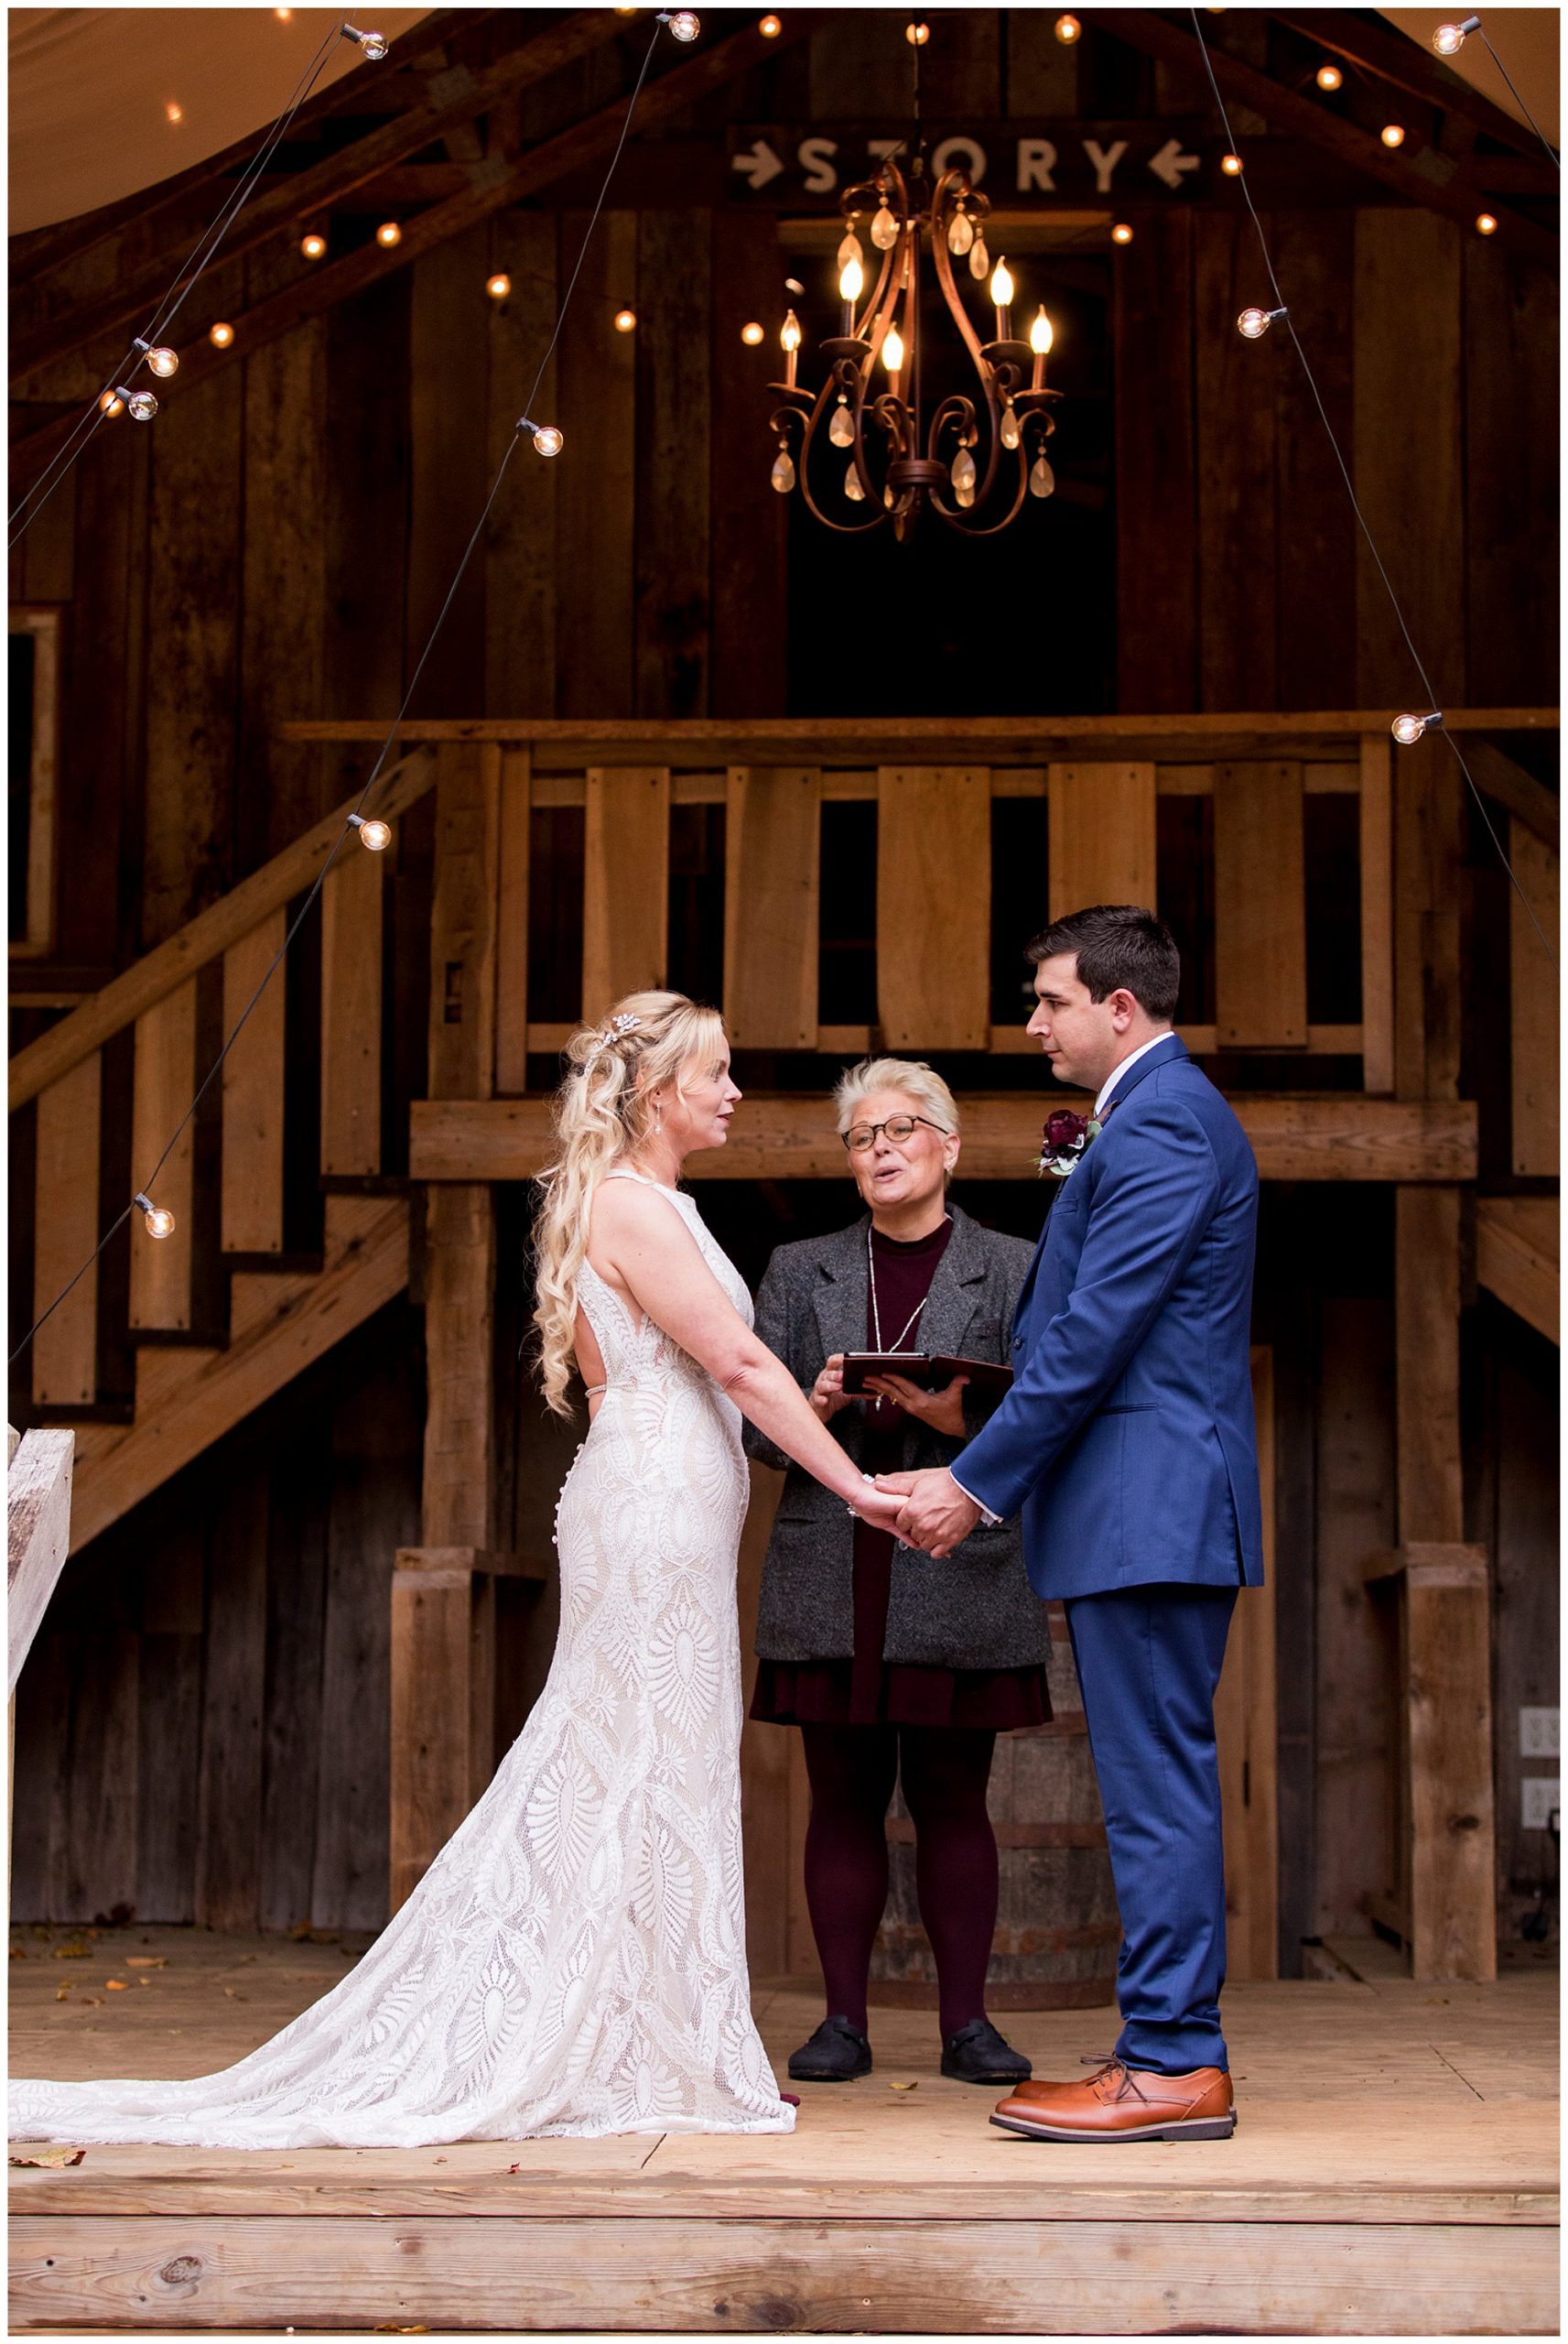 Story Inn elopement ceremony in Nashville, Indiana